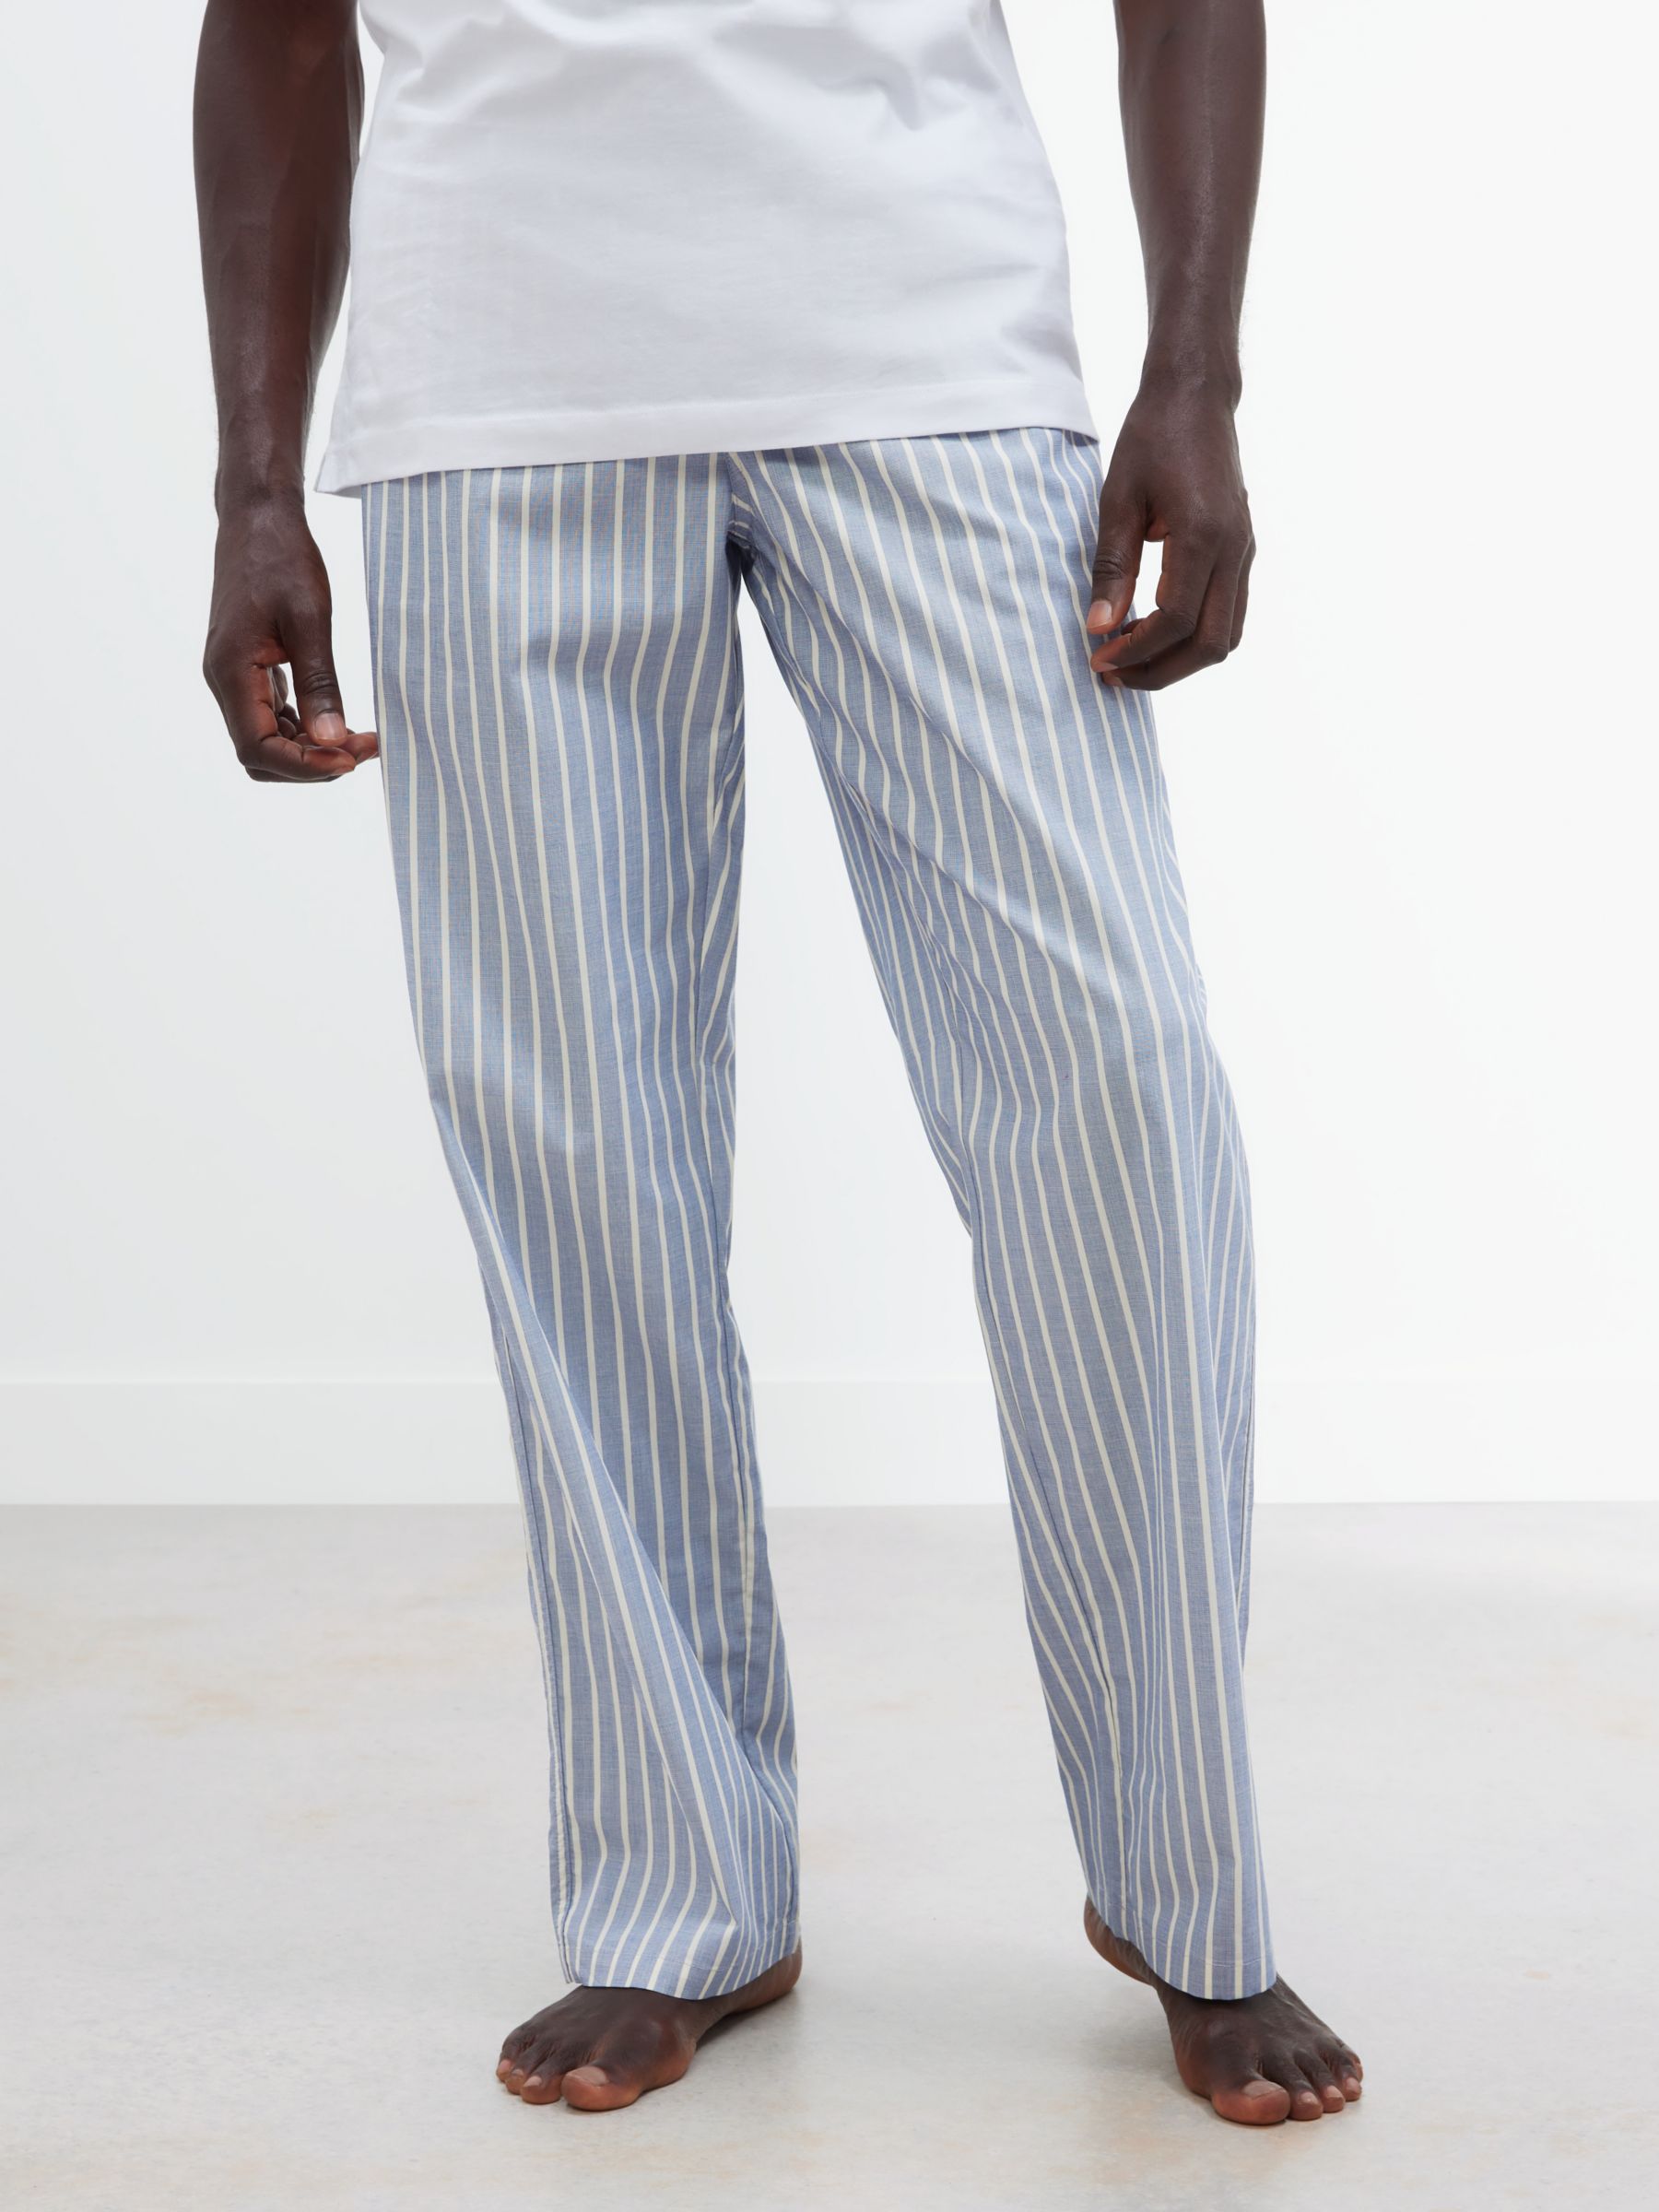 Men's Cotton Striped Pajama Pants